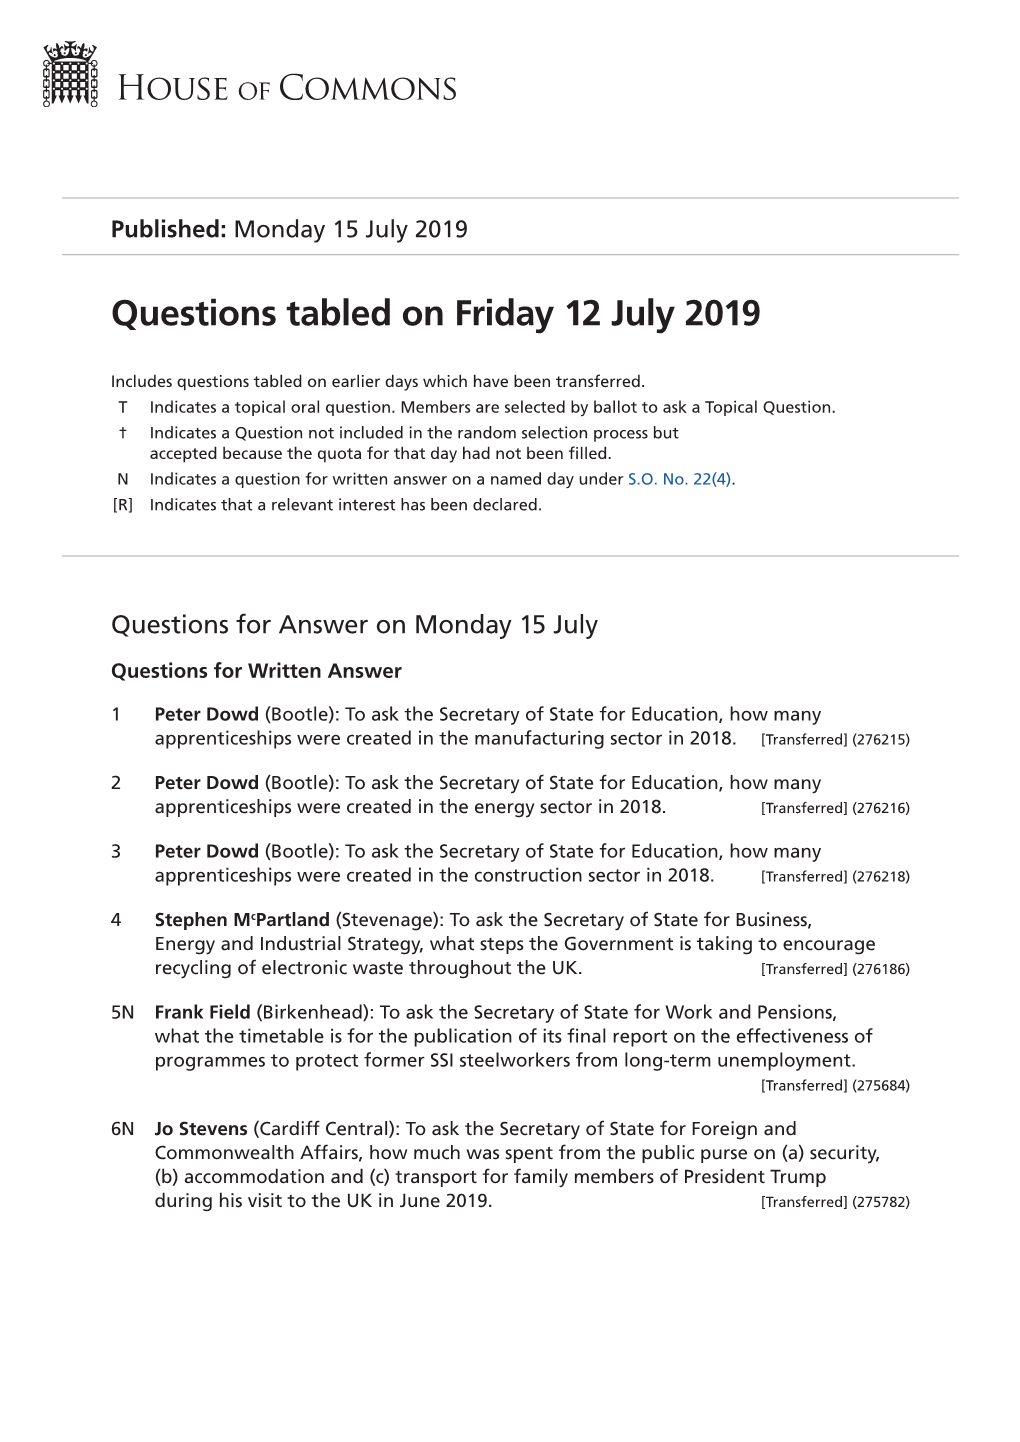 Questions Tabled on Fri 12 Jul 2019